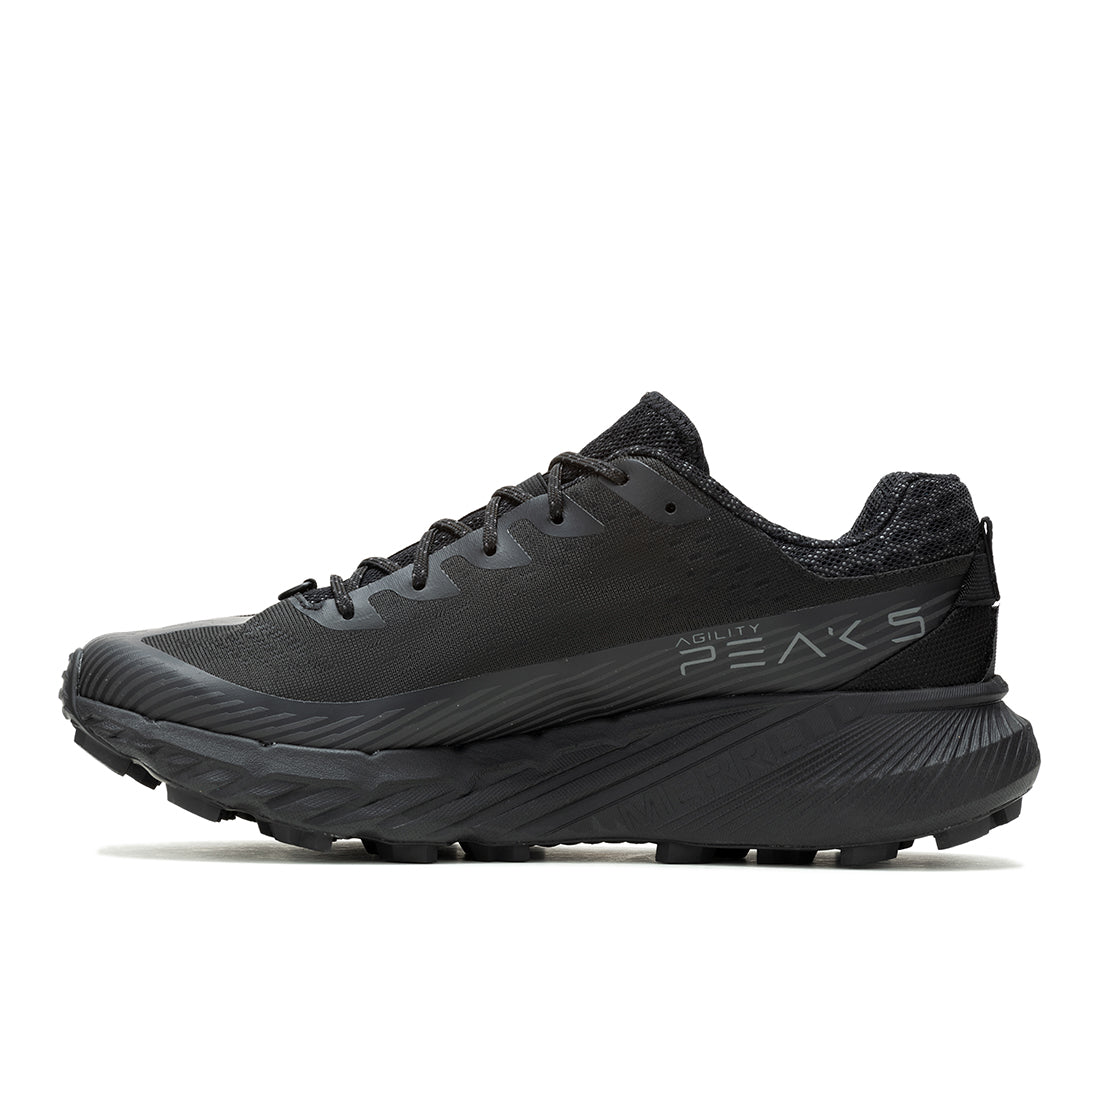 Agility Peak 5 – Black/Black Mens Trail Running Shoes-2